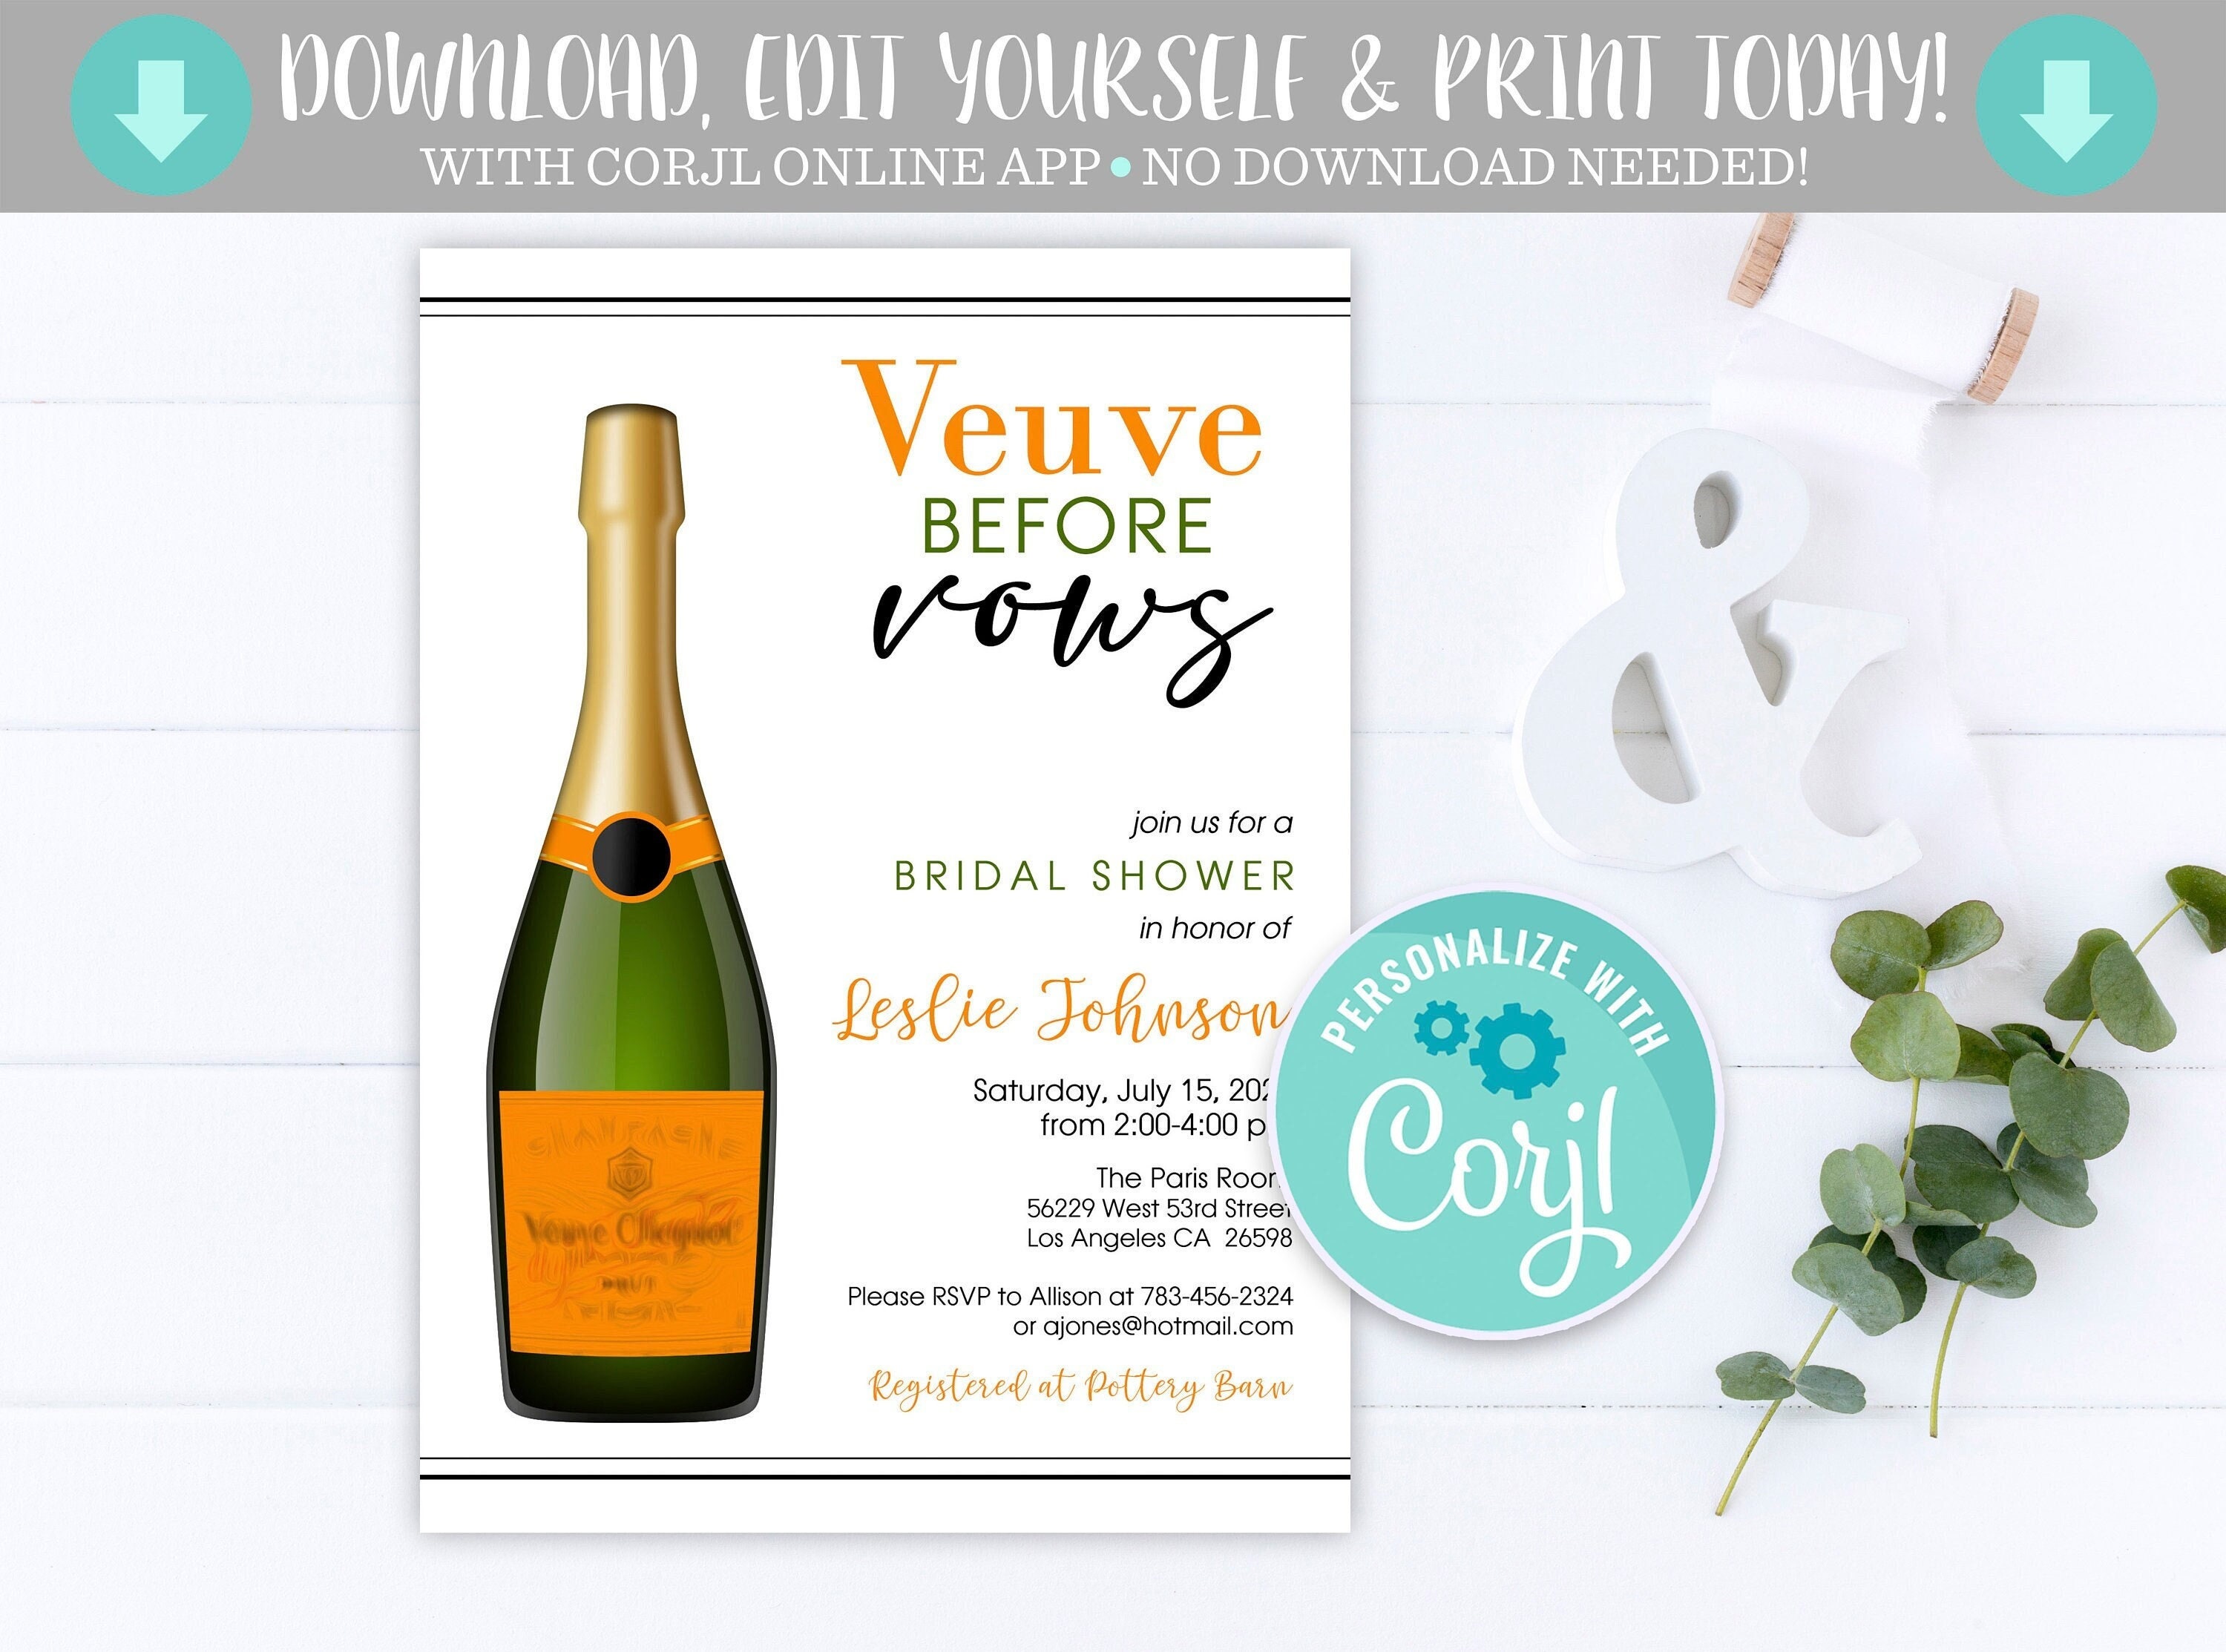 Champagne Veuve Cliquote Brut Yellow Tshirt Design SVG Digital Cricut File